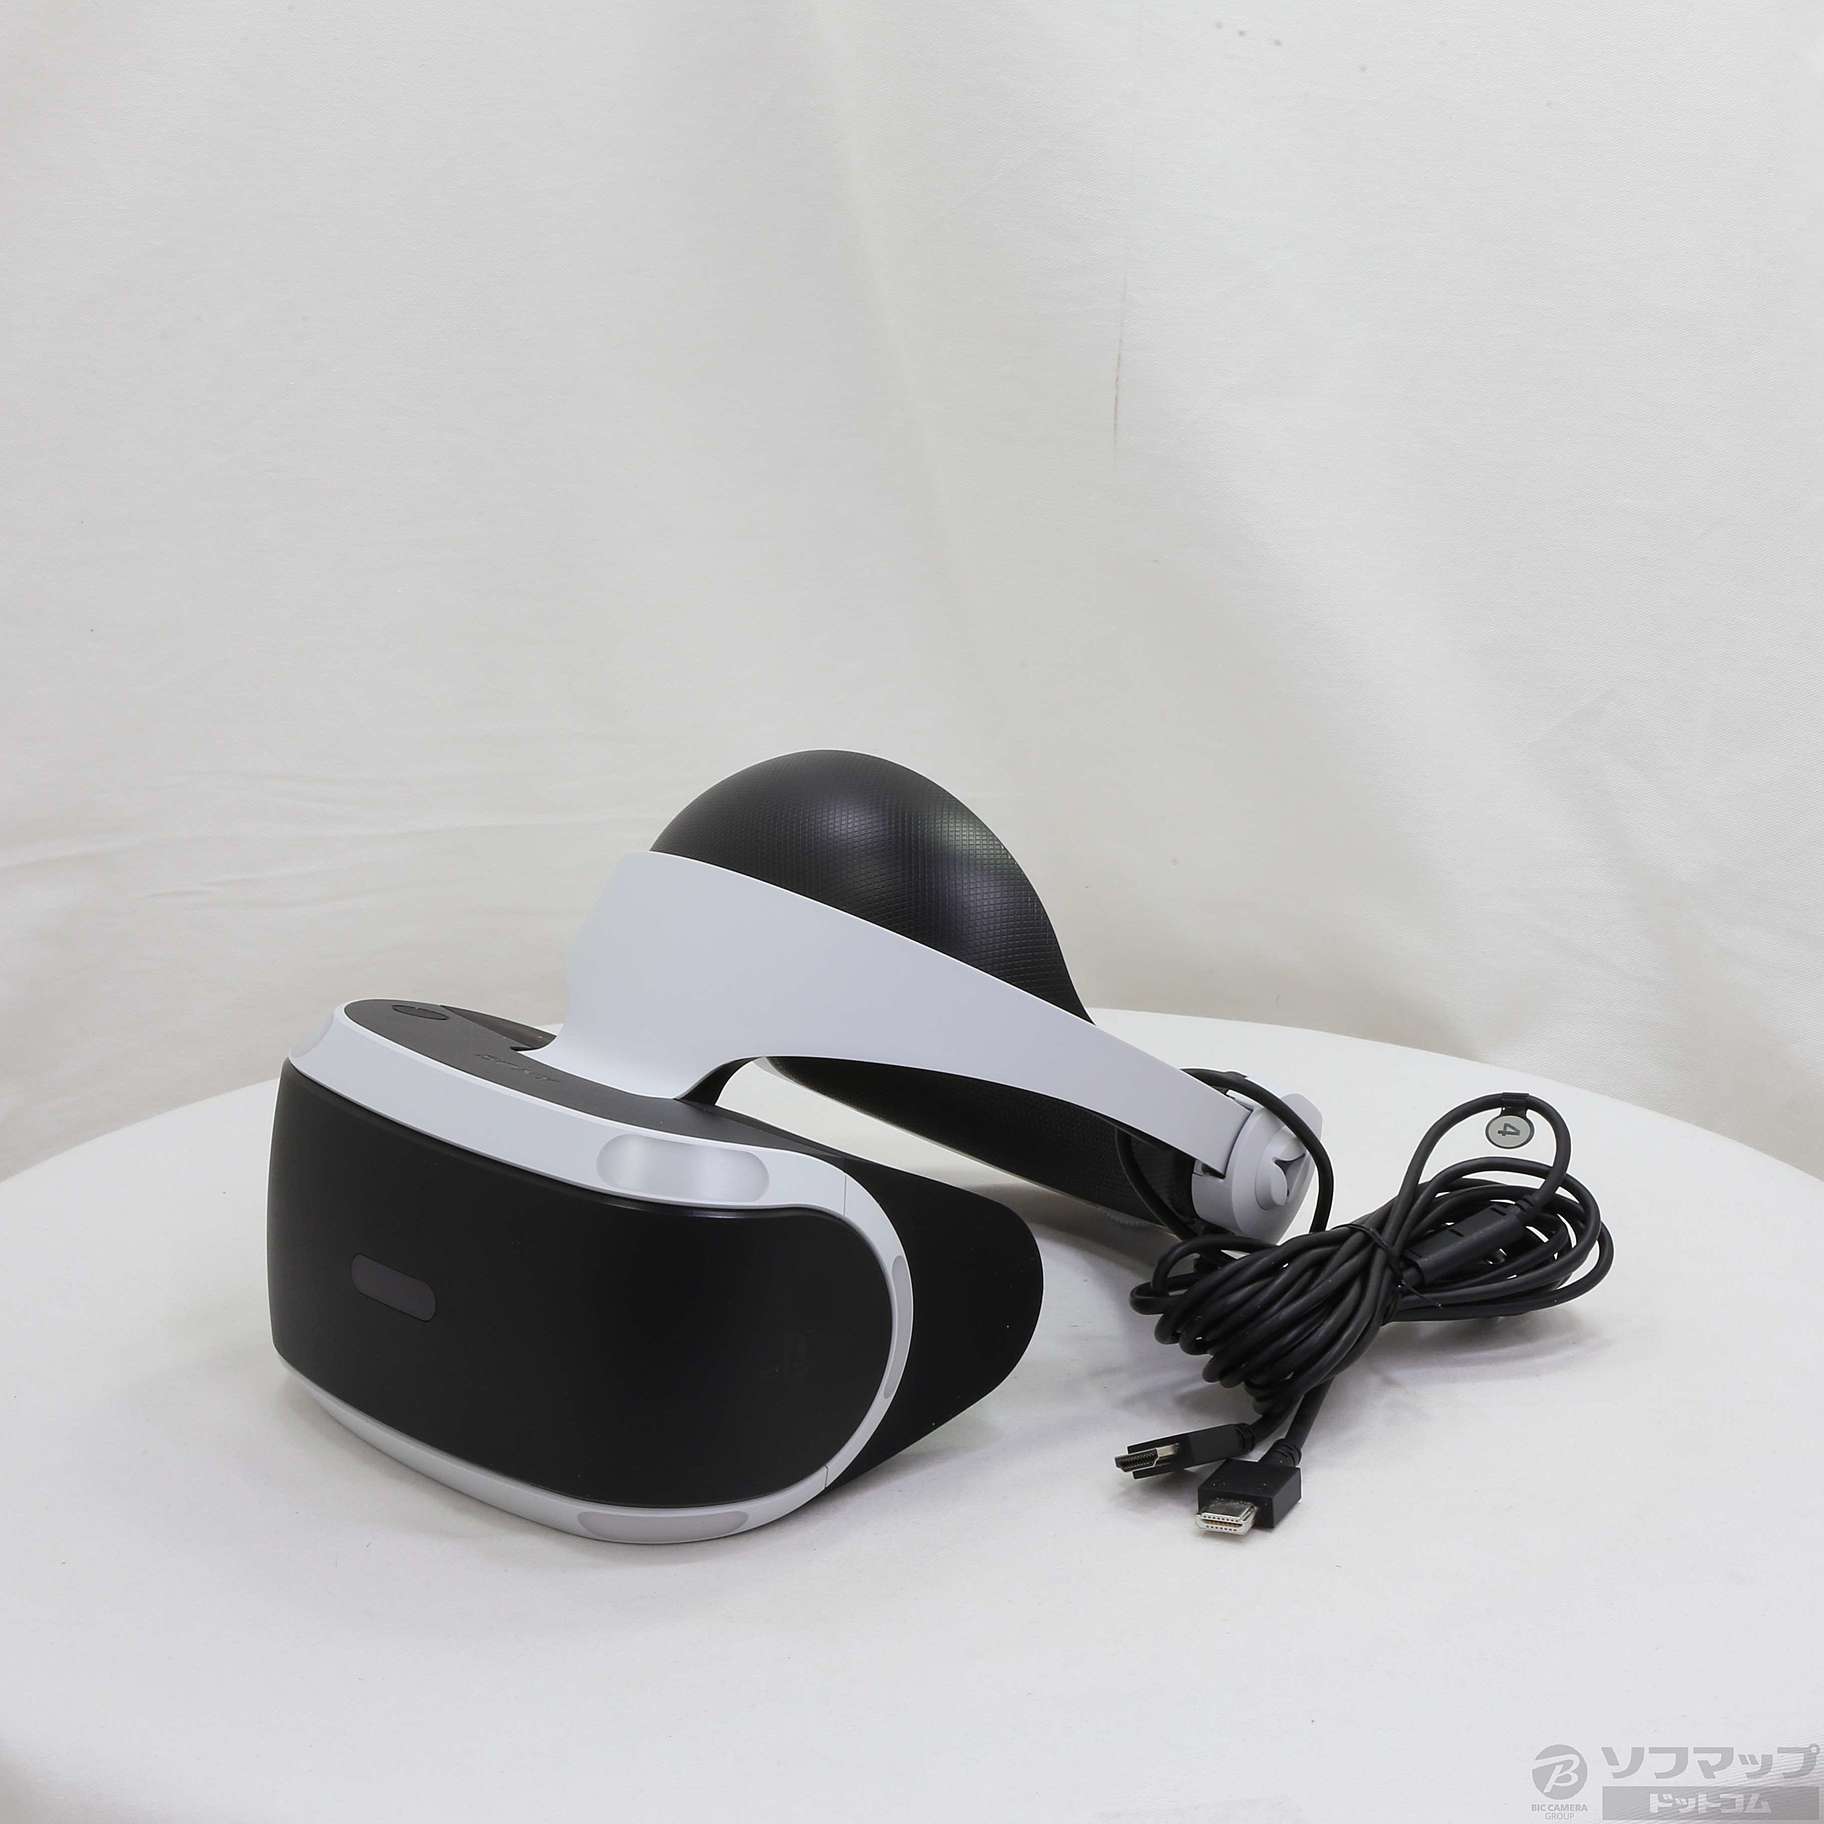 PlayStation  VR  variety pack